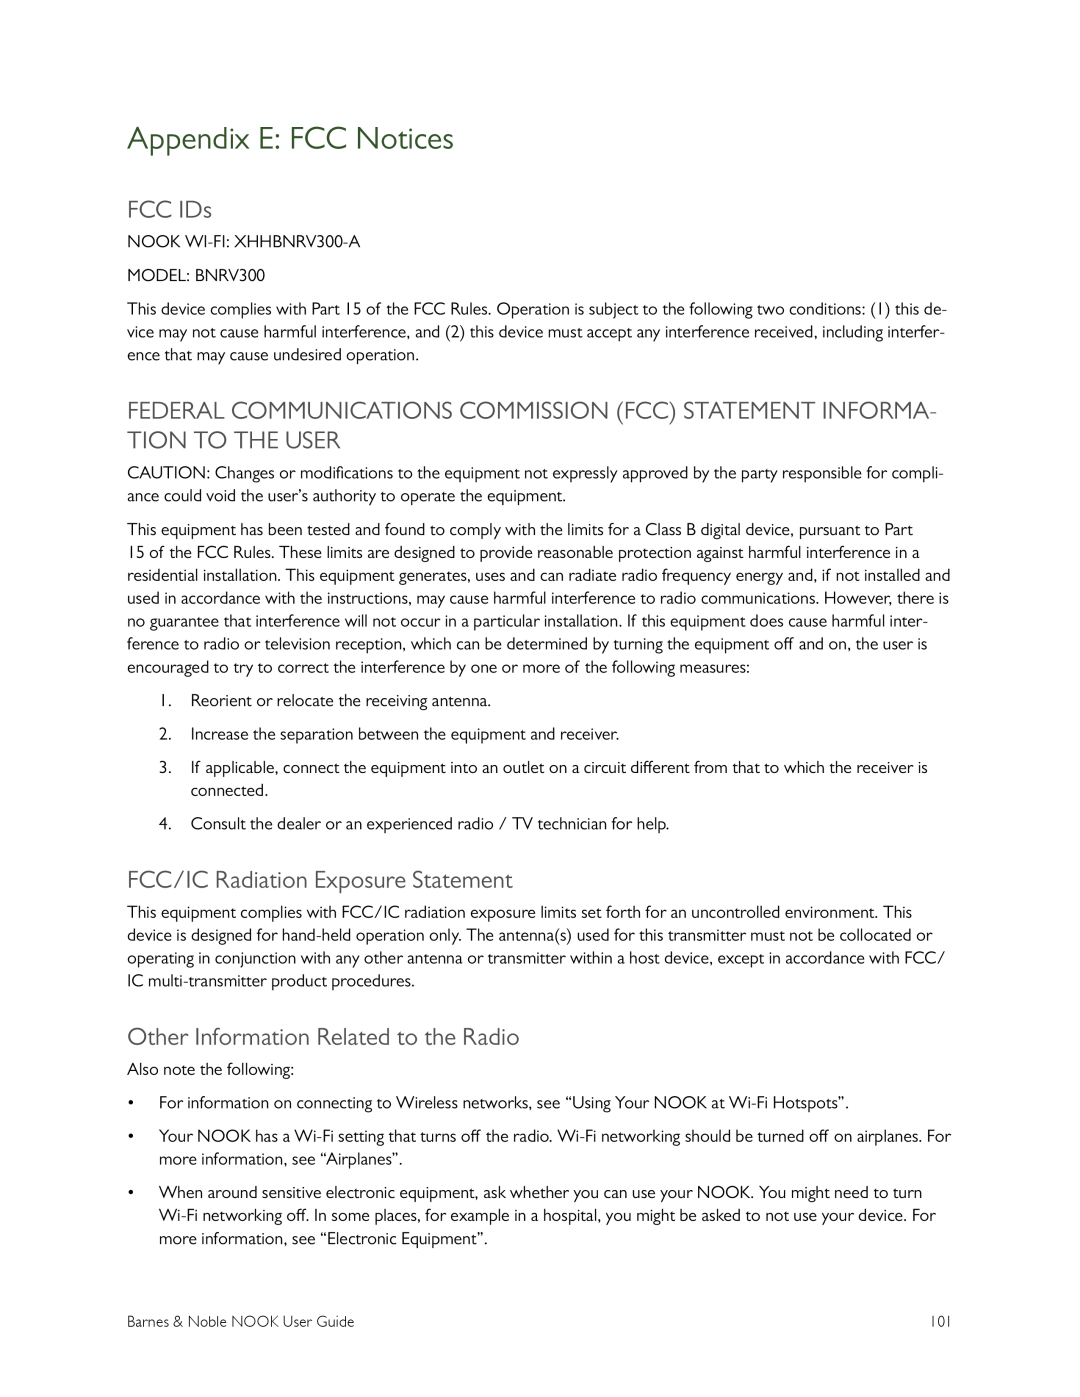 Barnes & Noble BNRV300 manual Appendix E FCC Notices, FCC IDs, FCC/IC Radiation Exposure Statement 